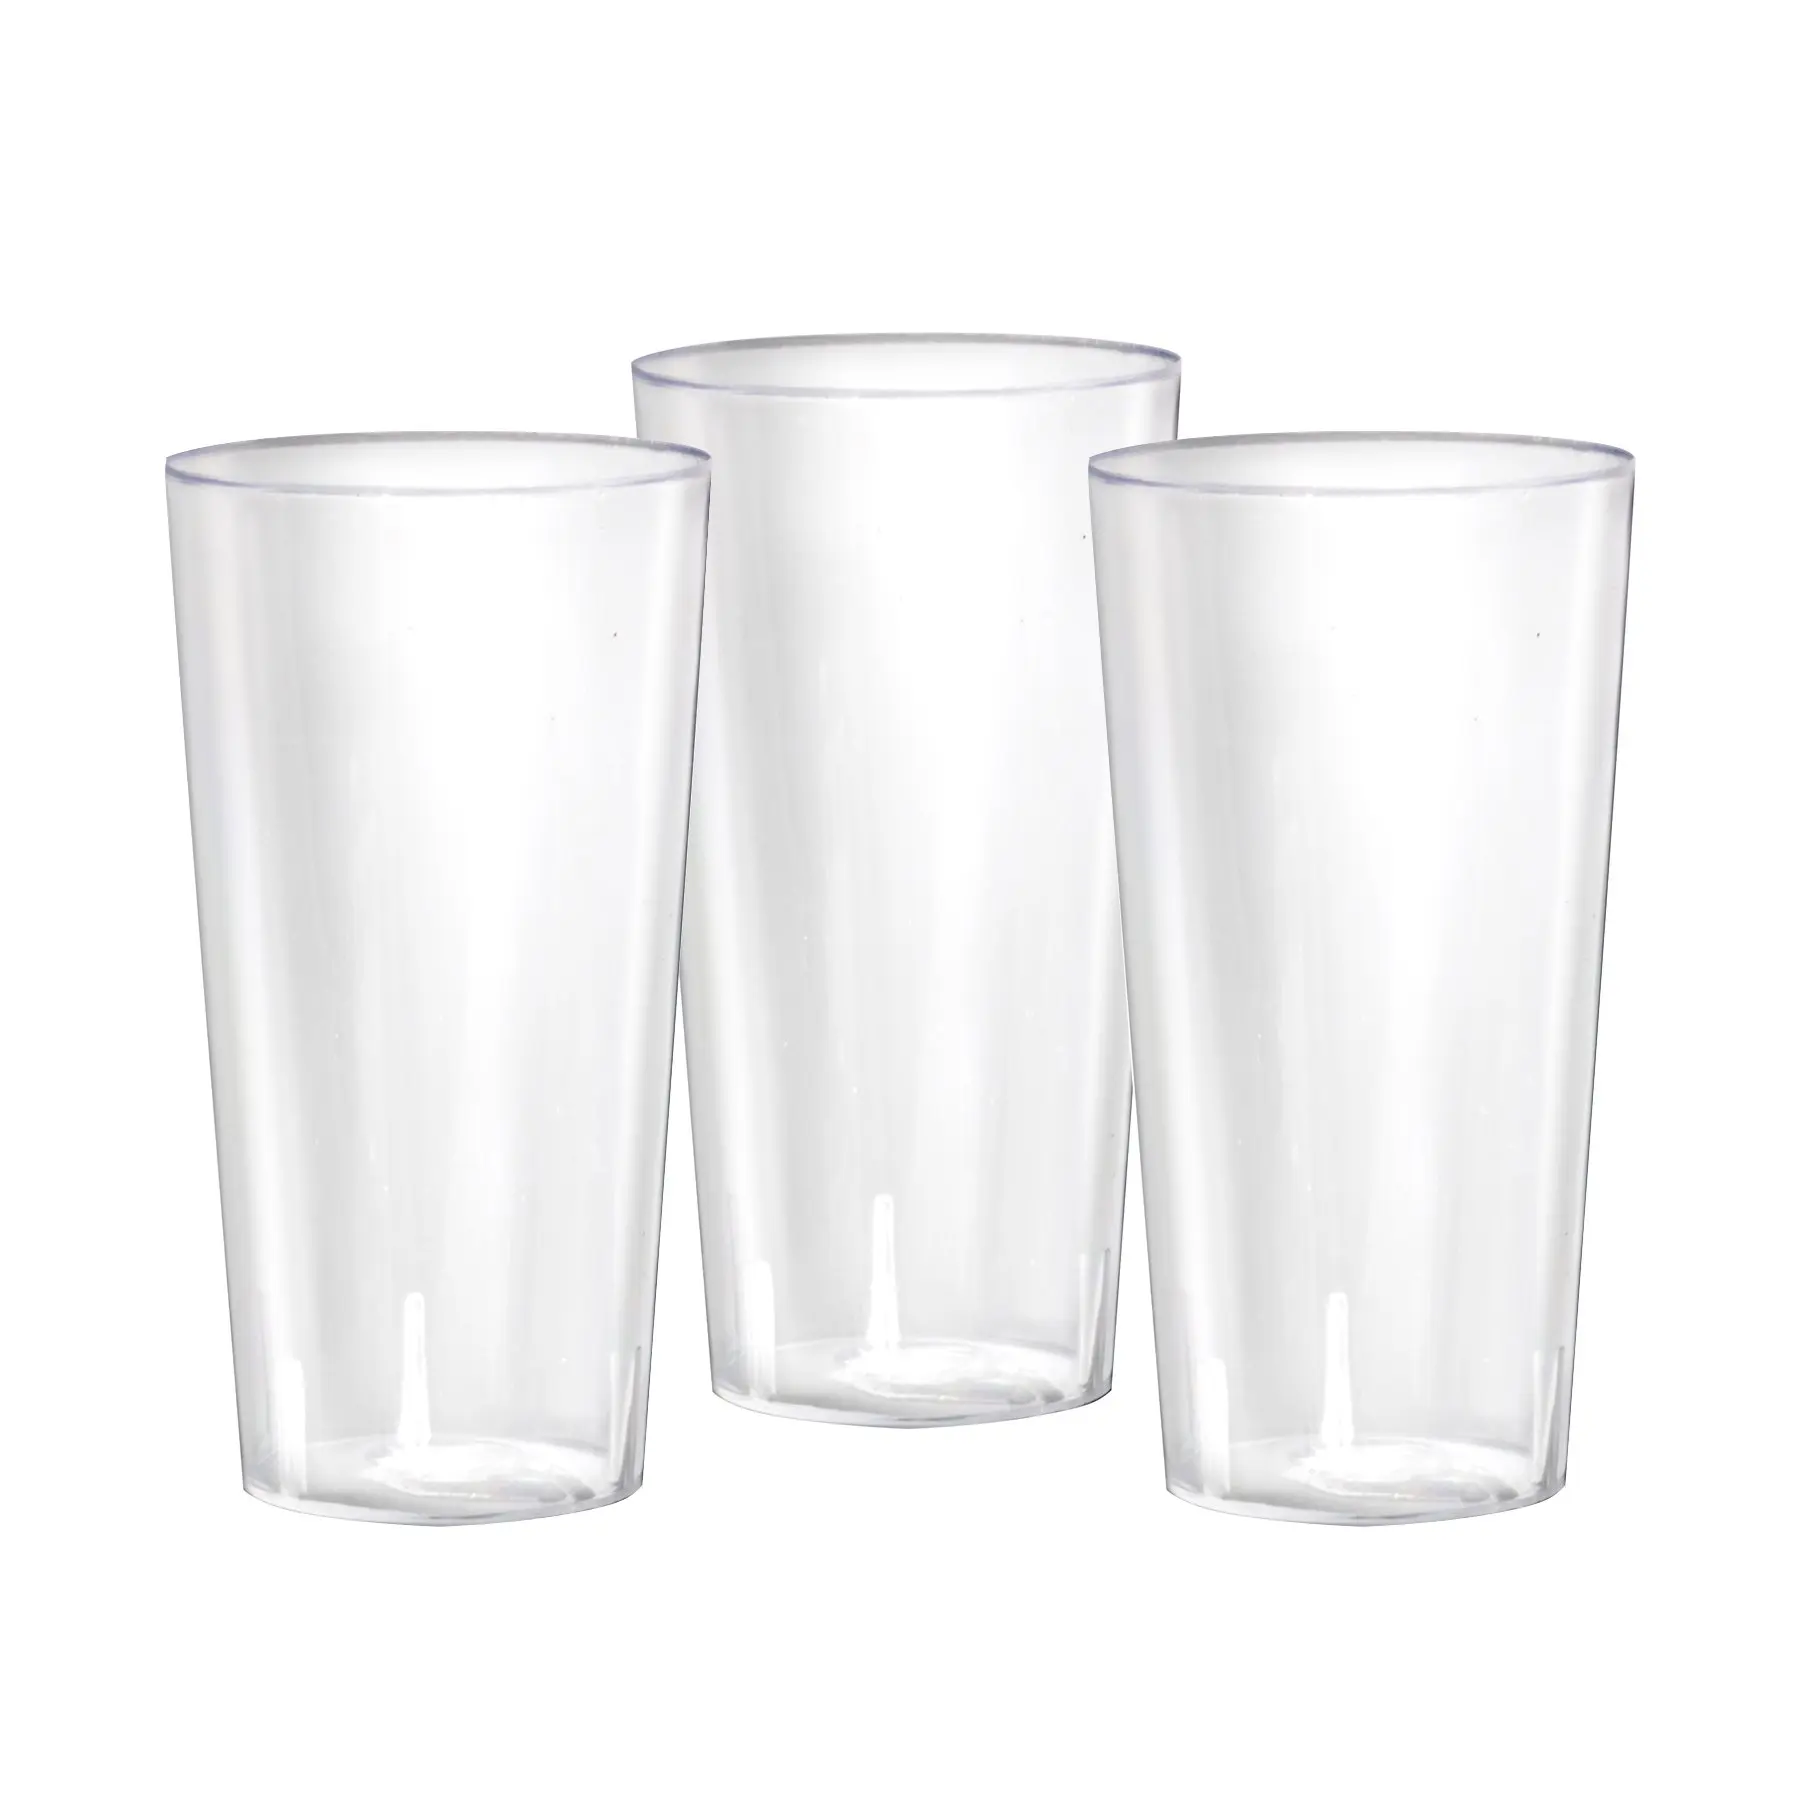 Party Essentials N302021 20 Count Hard Plastic Beer Flight Tasting Glasses,...